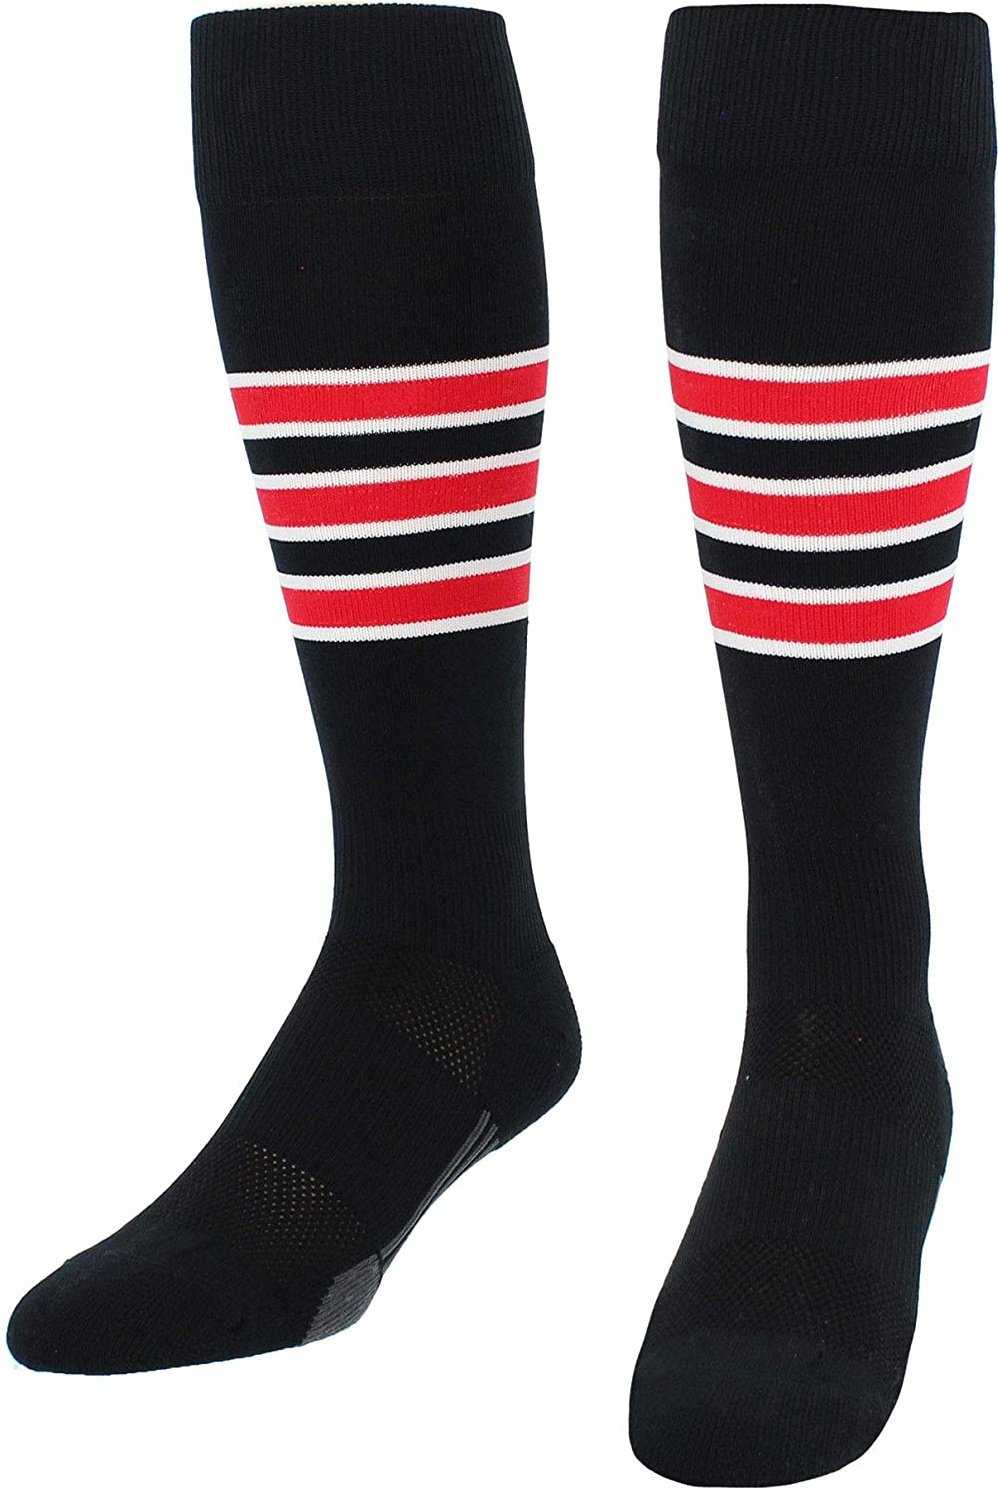 TCK Dugout Knee High Socks - Black White Scarlet - HIT a Double